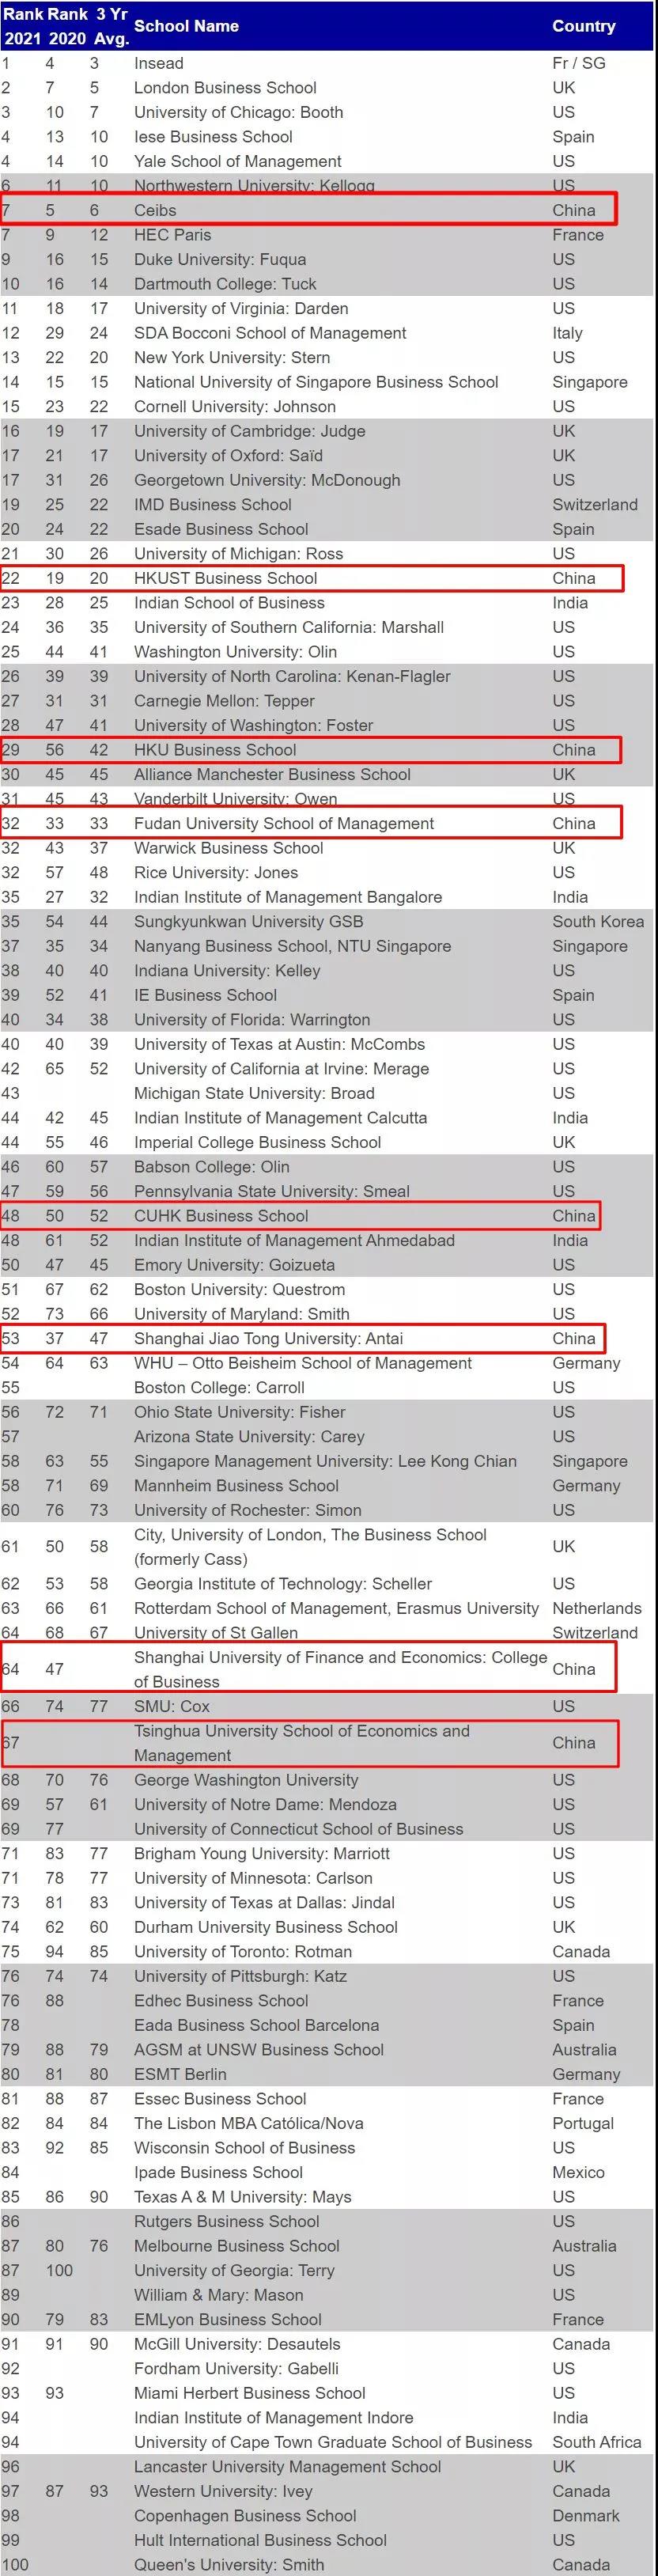 MBA百强榜单